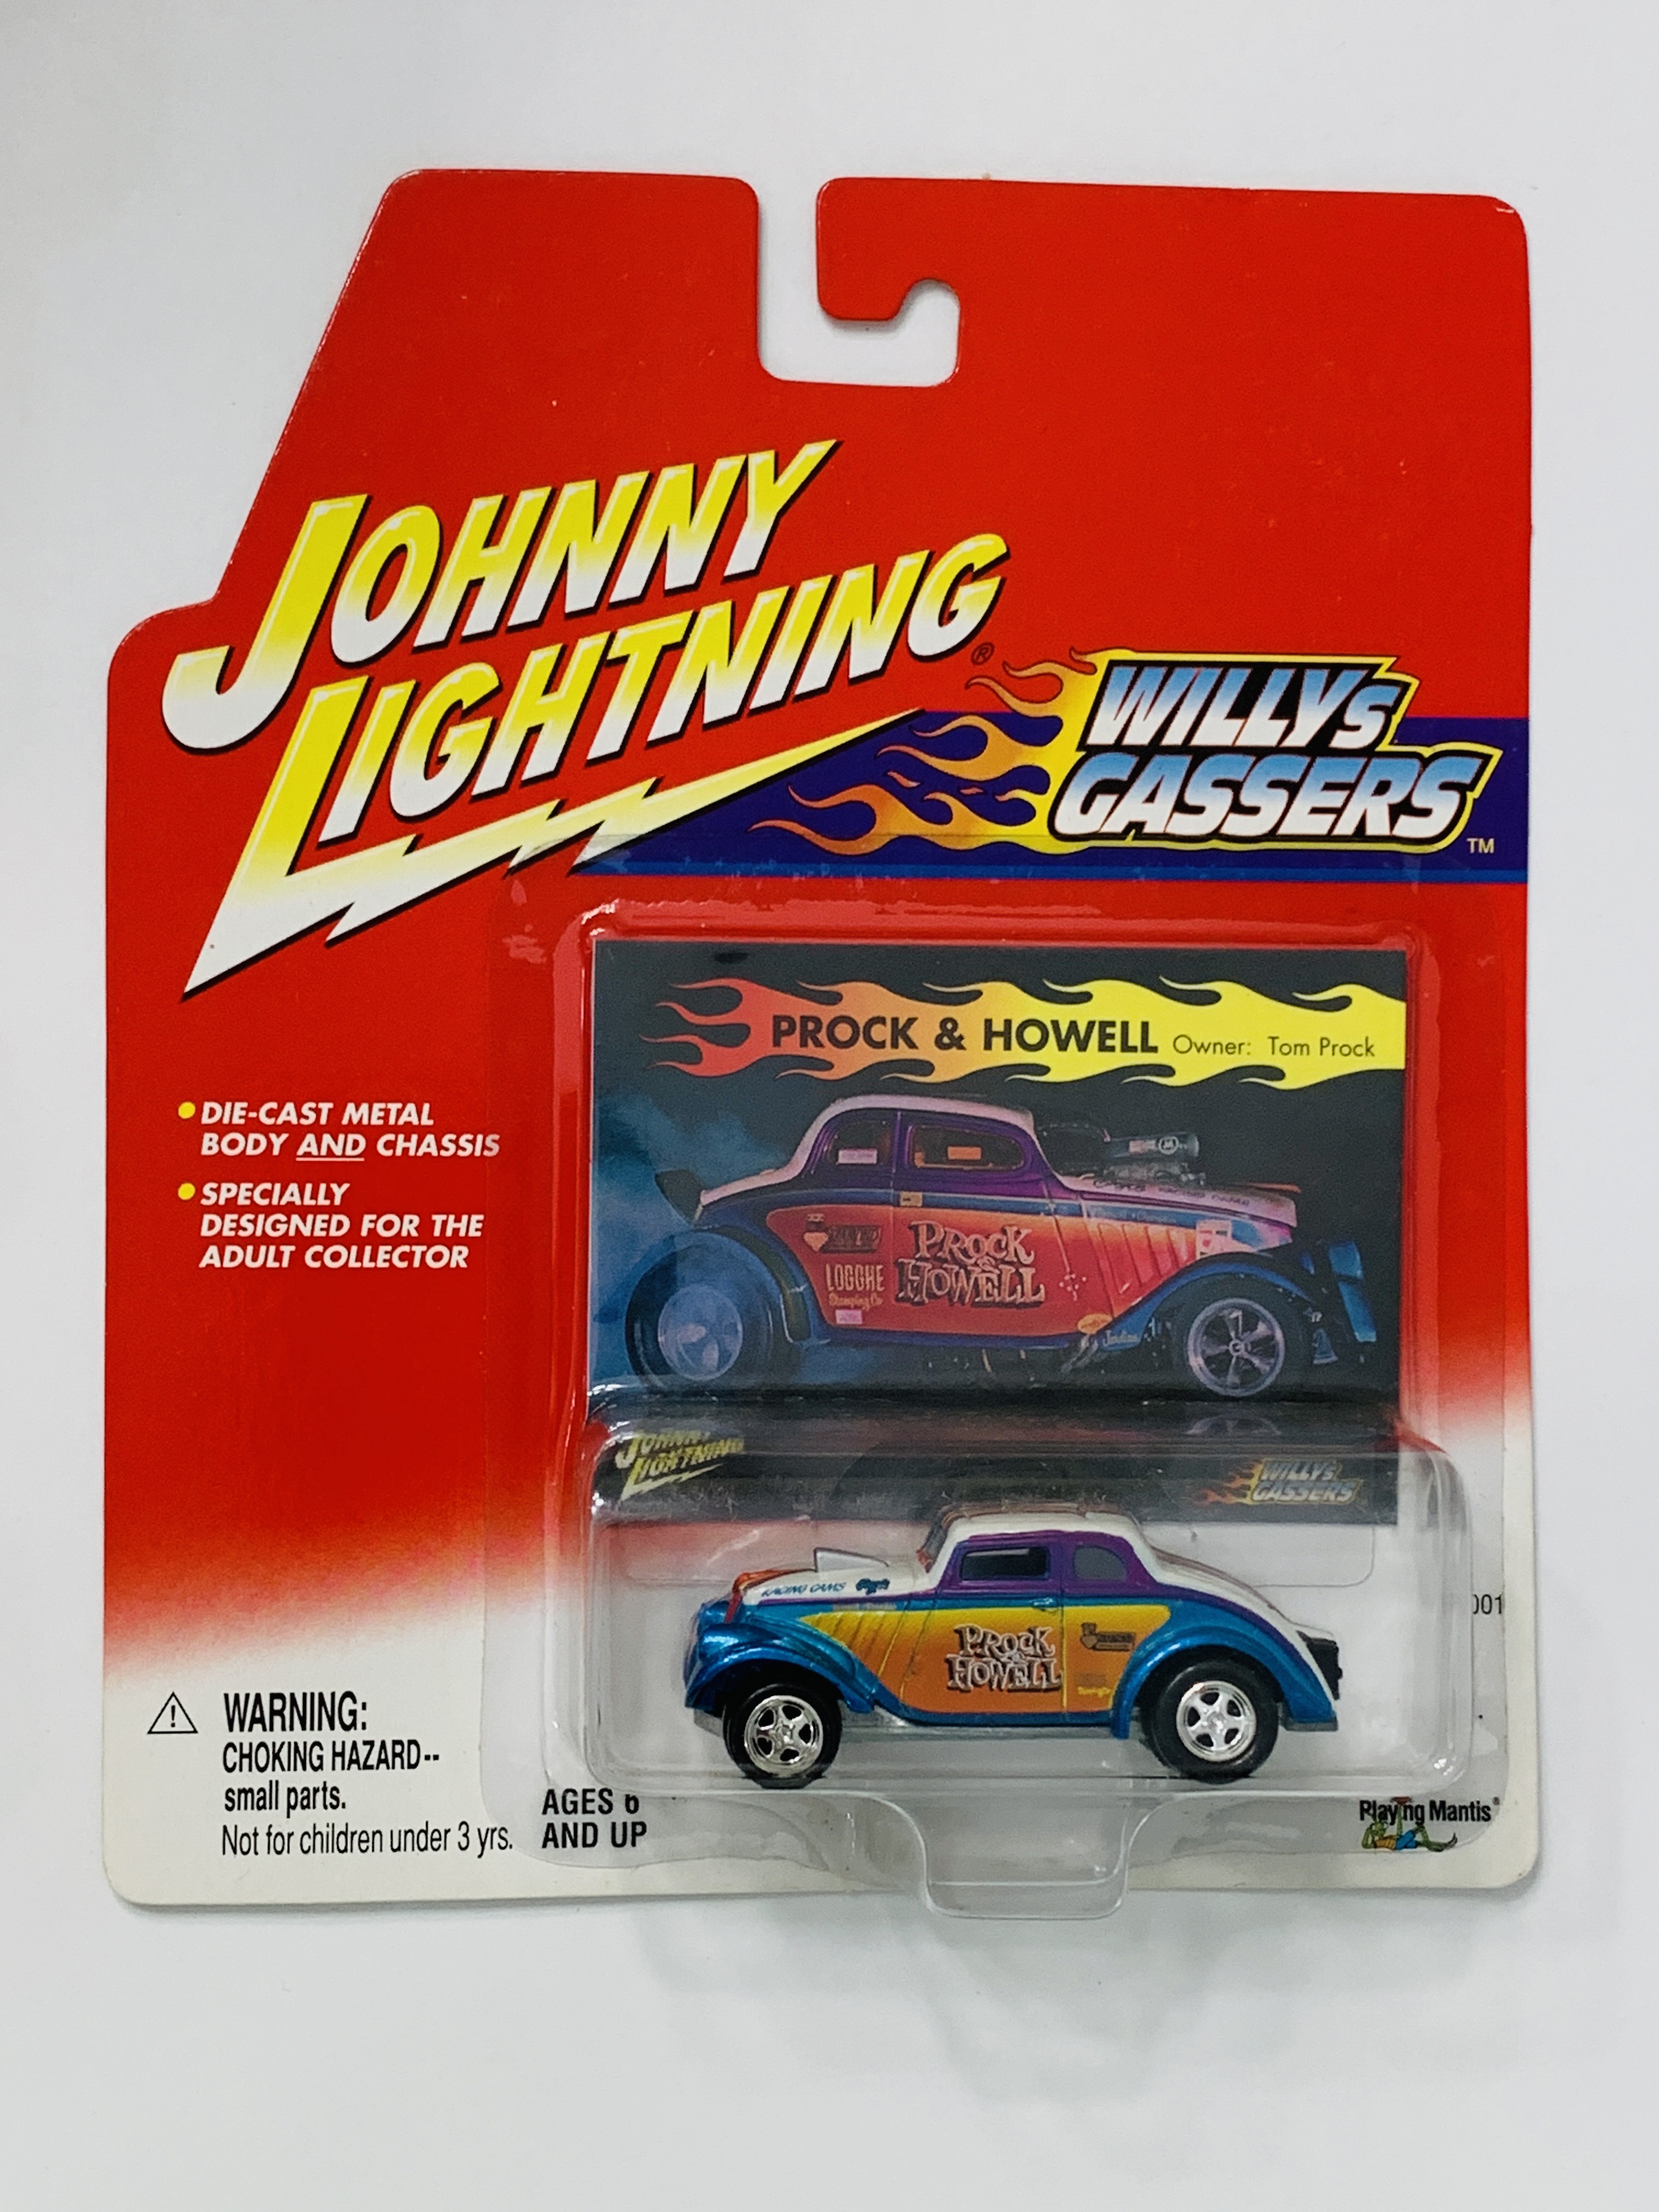 Johnny Lightning Willys Gassers Prock & Howell